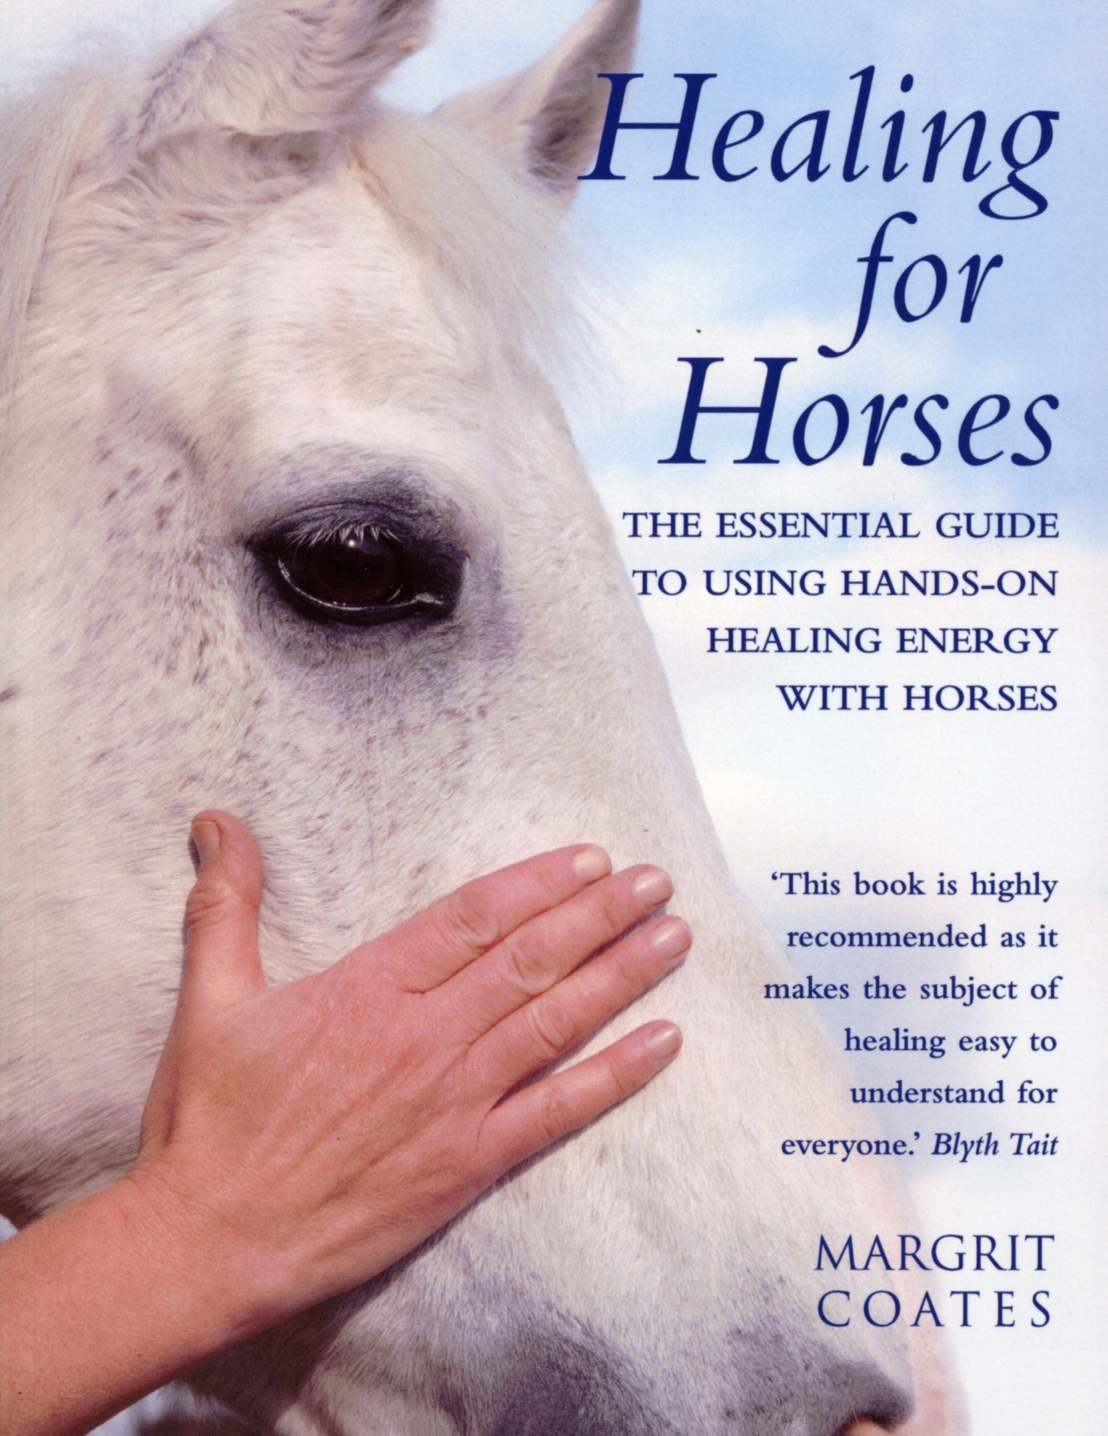 Healing For Horses by Margrit Coates - Penguin Books New Zealand